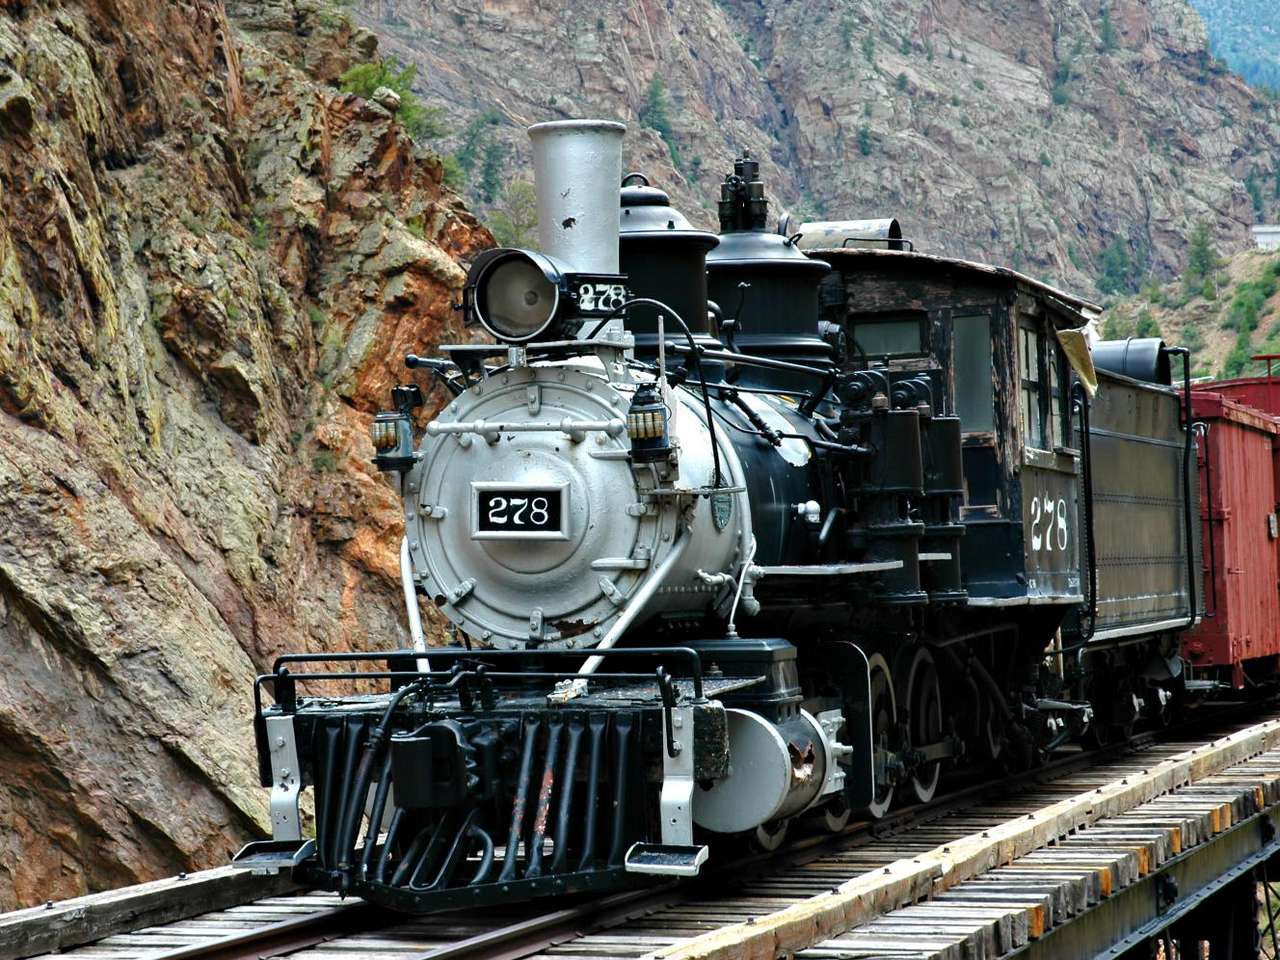 Narrow Gauge Steam Locomotive puzzle online from photo